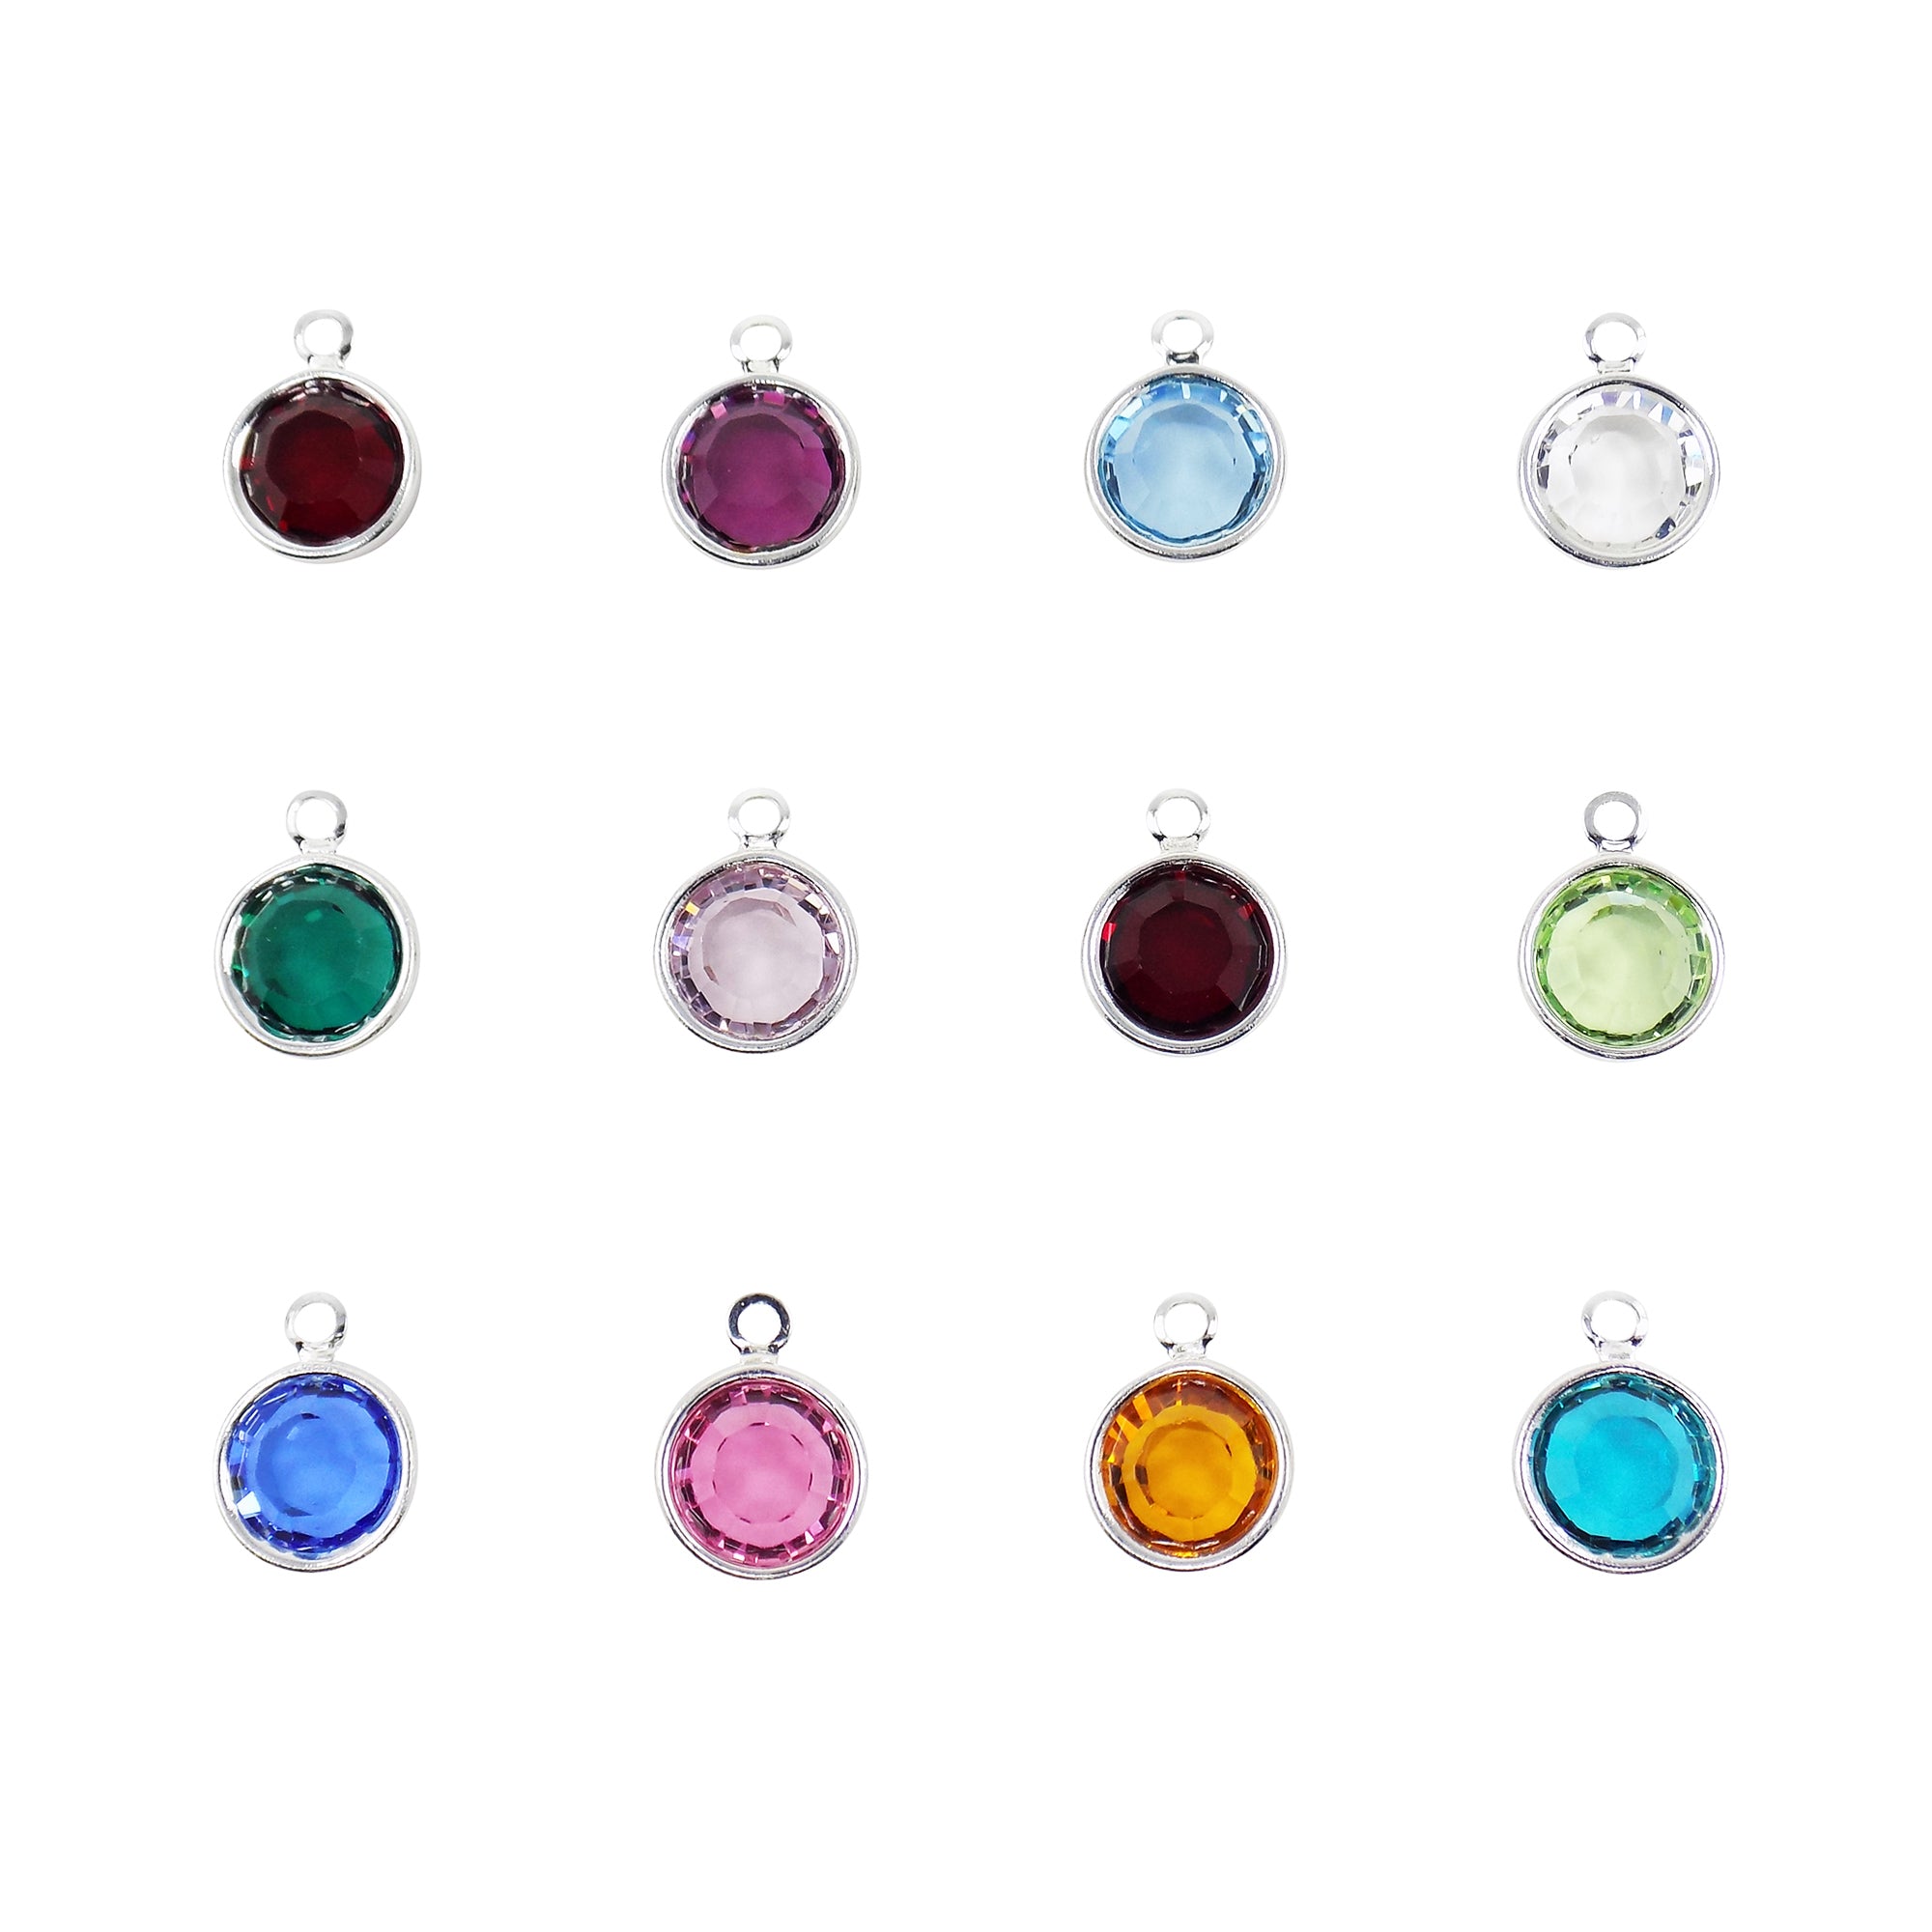 Swarovski Birthstone Crystal Silver Plated Charm, Birthday Charm Choose Month or Color. Size 9.6x7mm